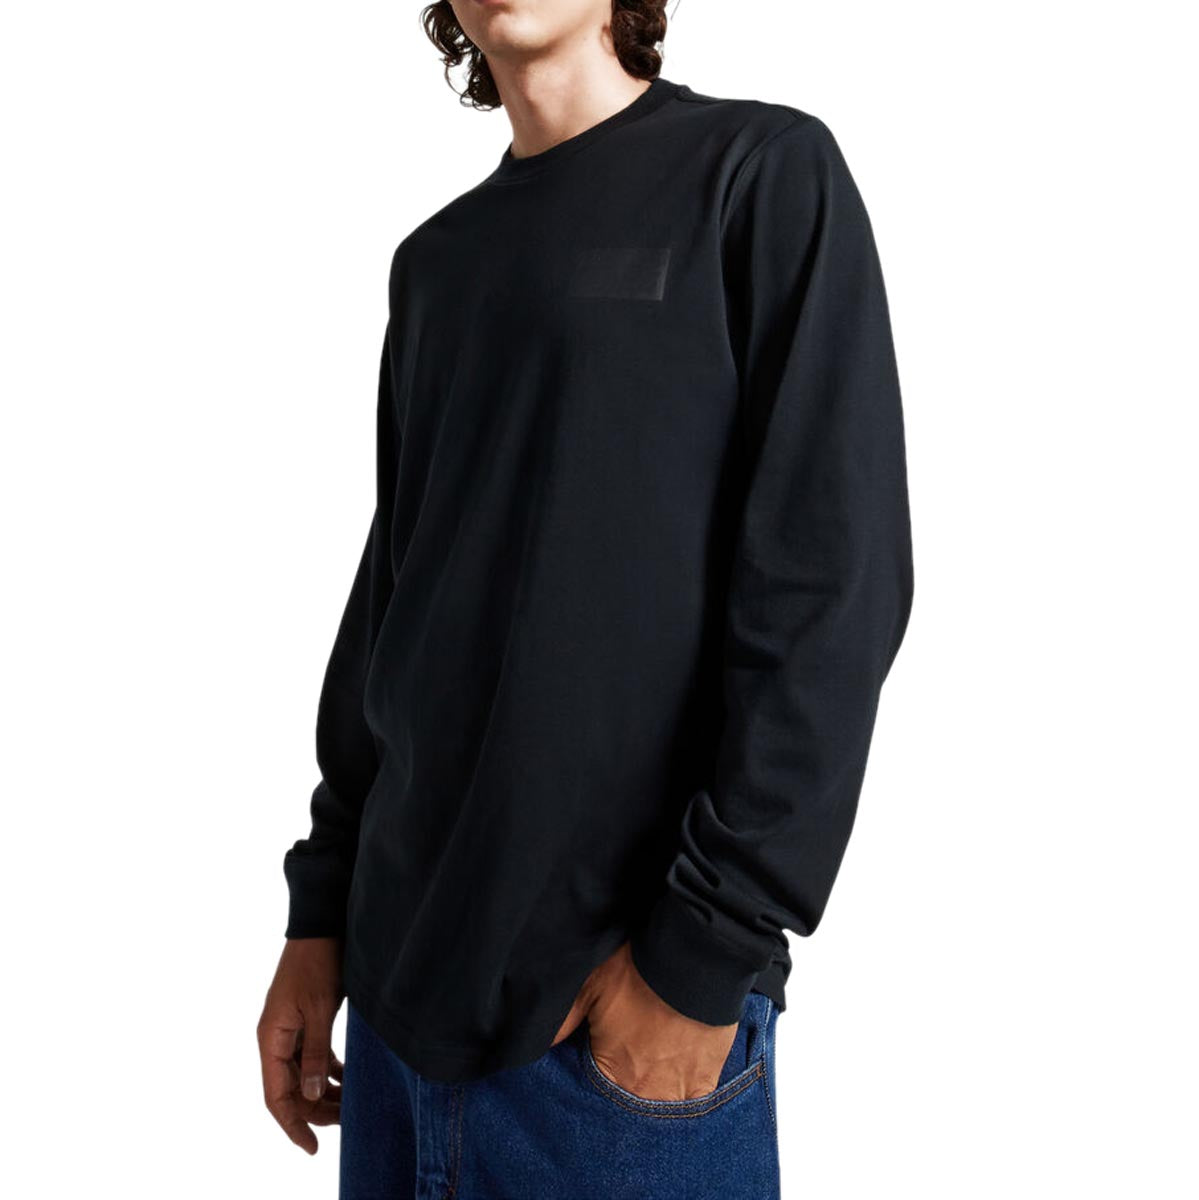 Converse Long Sleeve T-Shirt - Black image 3